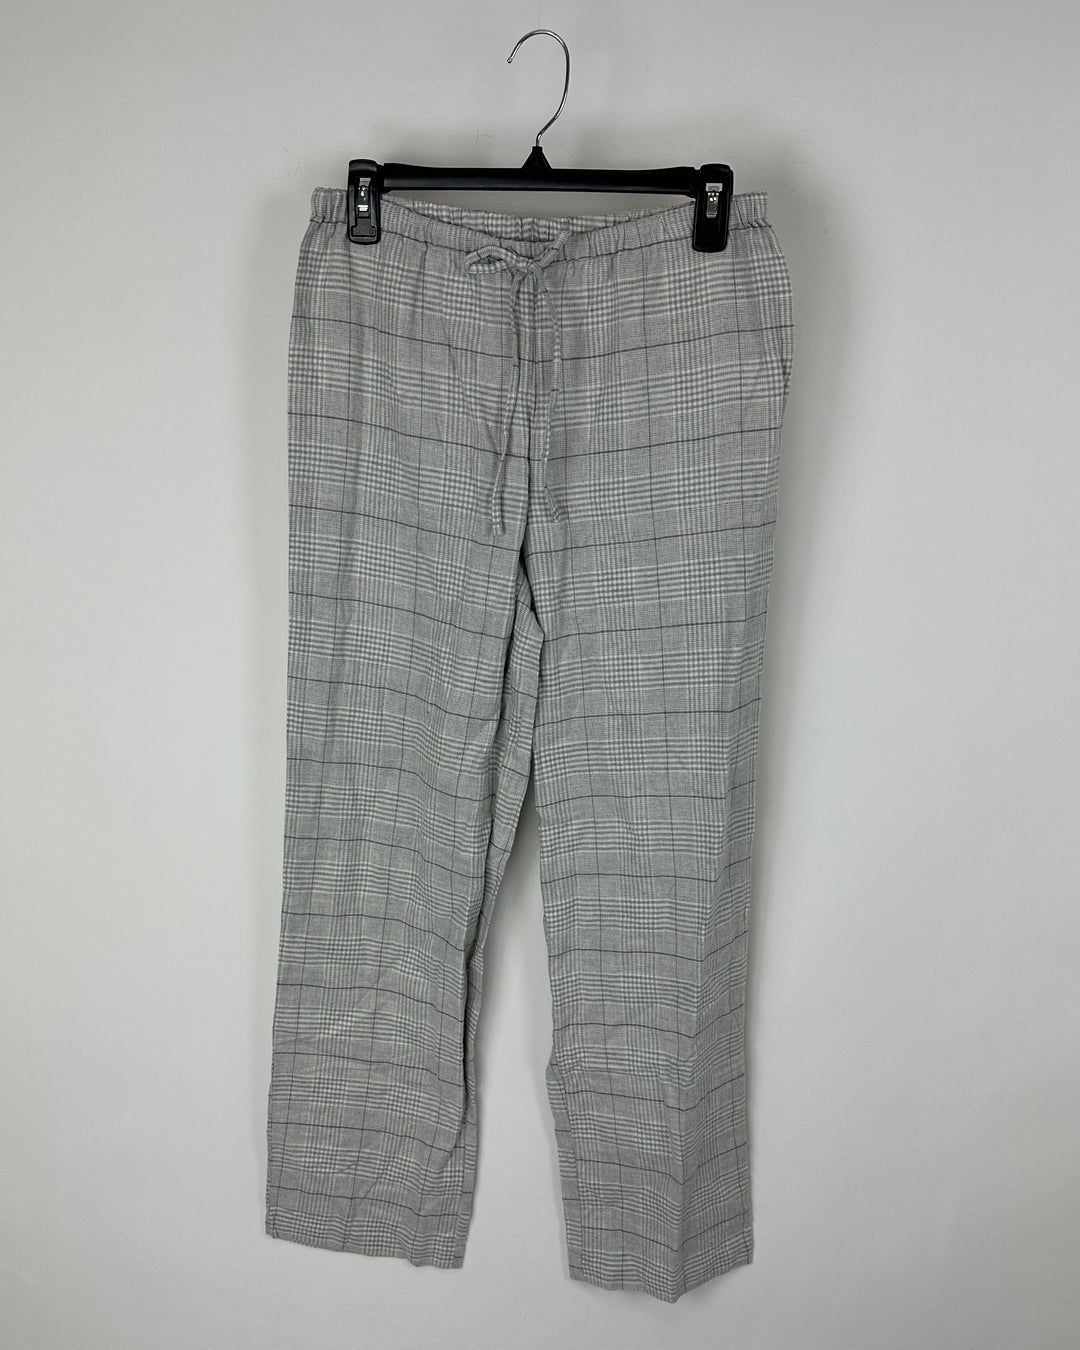 Grey and Purple Plaid Pajama Pants - Small